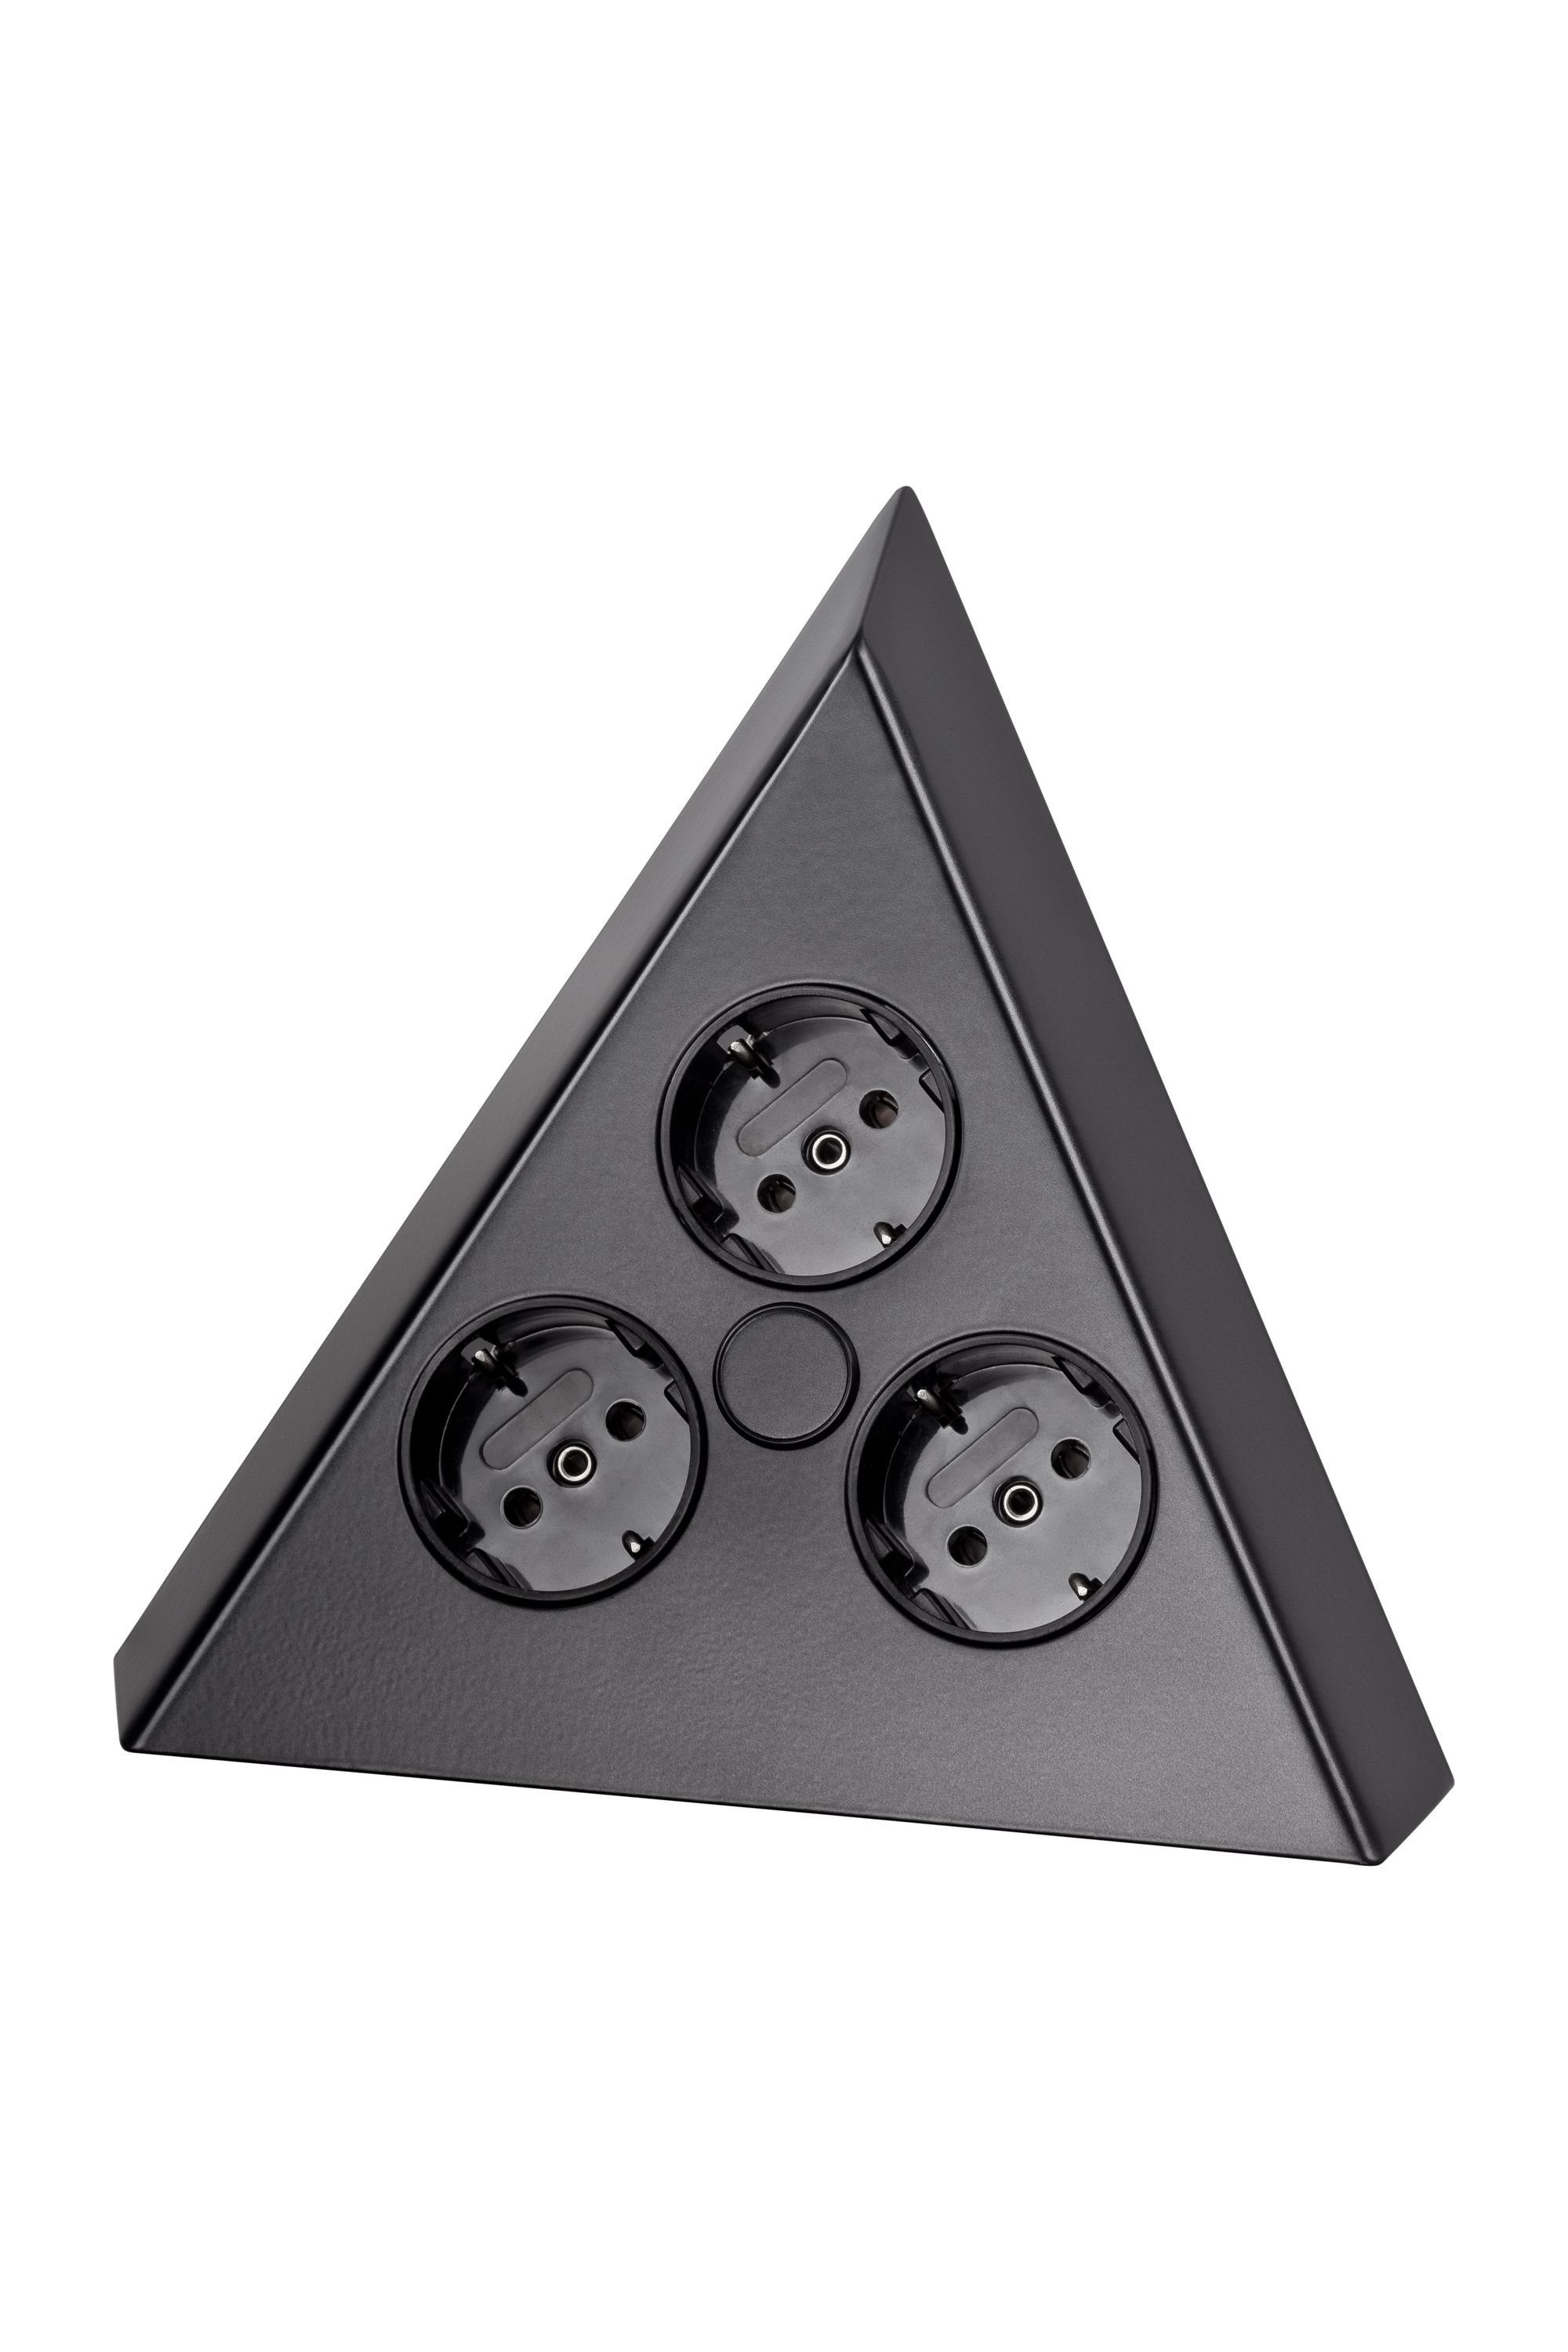 3007/ C Mehrfachsteckdose Dreiecksteckdose schwarz ST matt Eck-Steckdose Thebo